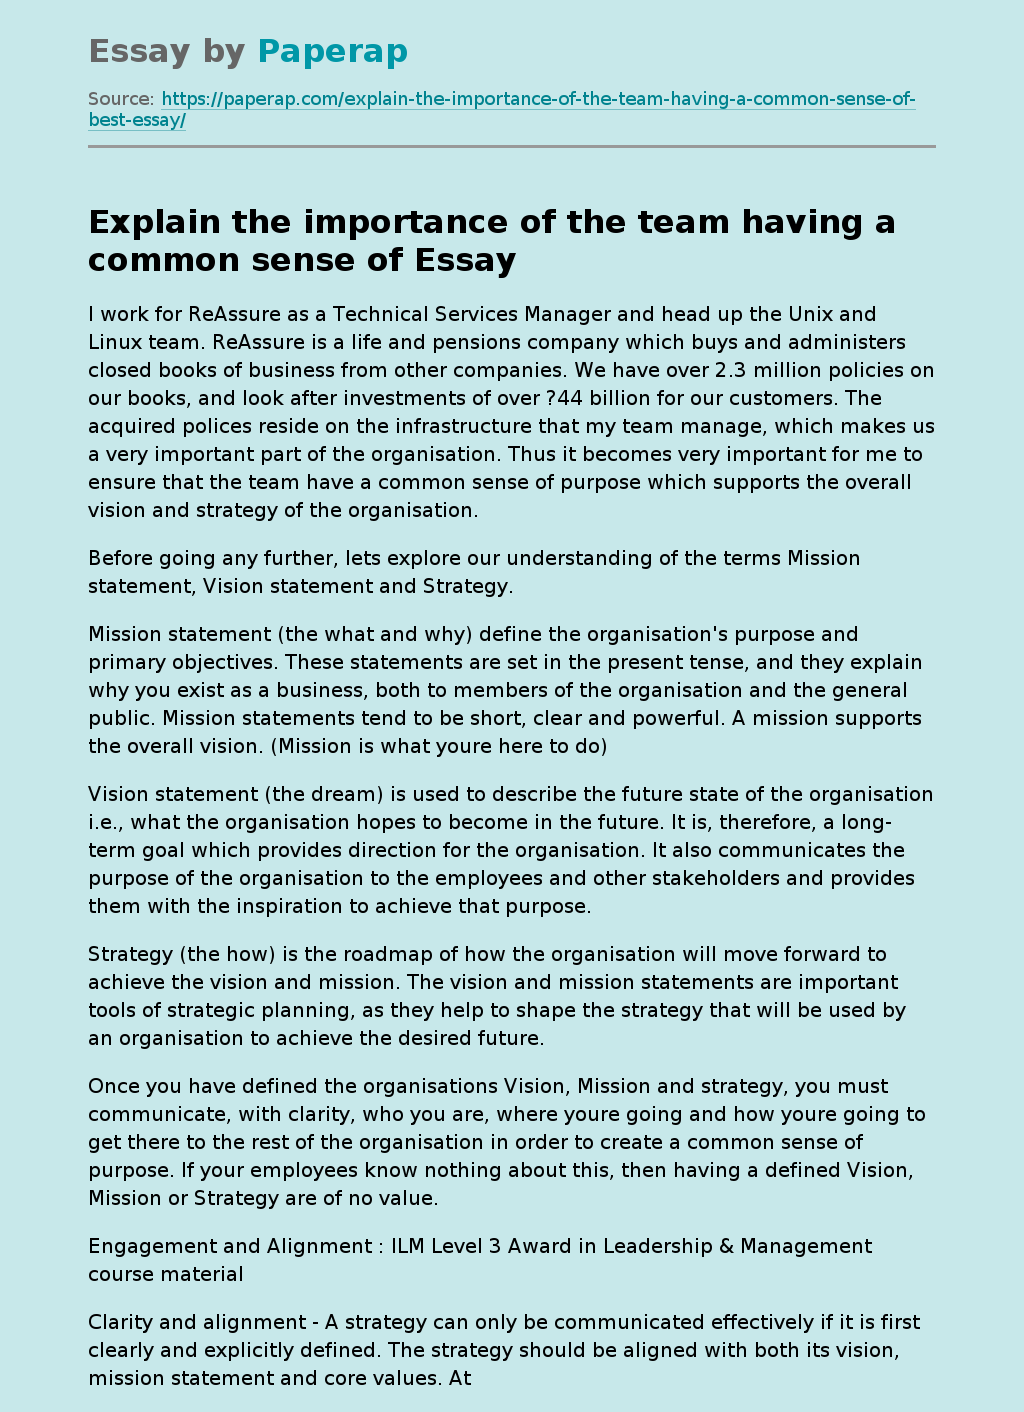 Explain the importance of the team having a common sense of